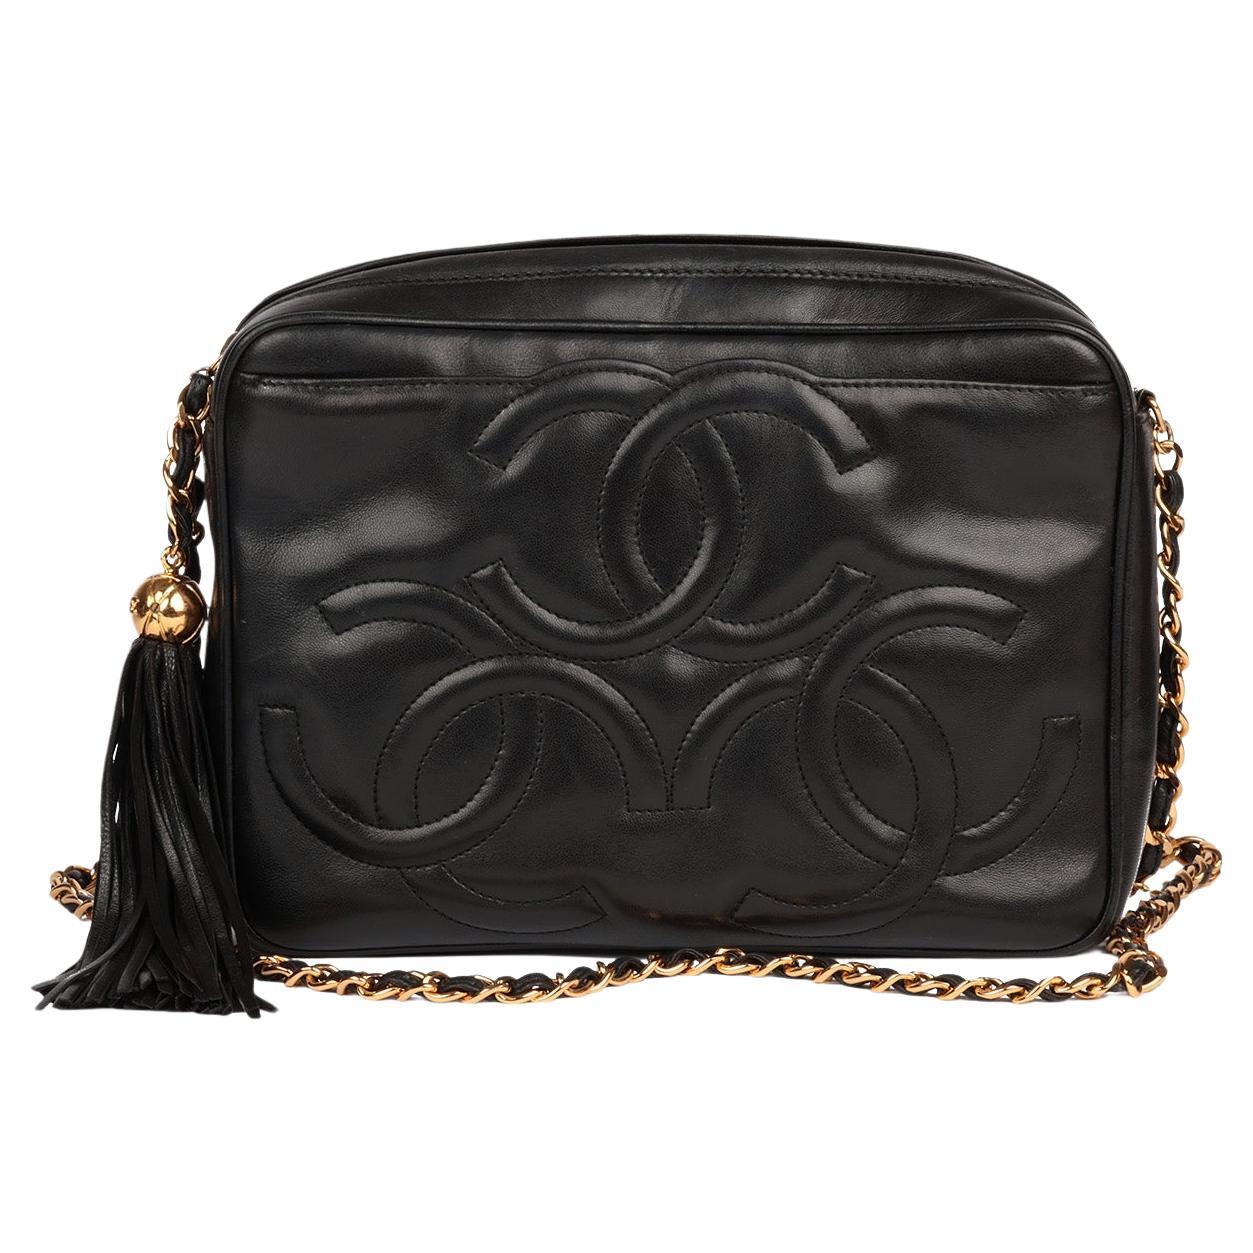 Chanel Black Smooth Lambskin Leather Vintage Small Fringe Timeless Camera Bag